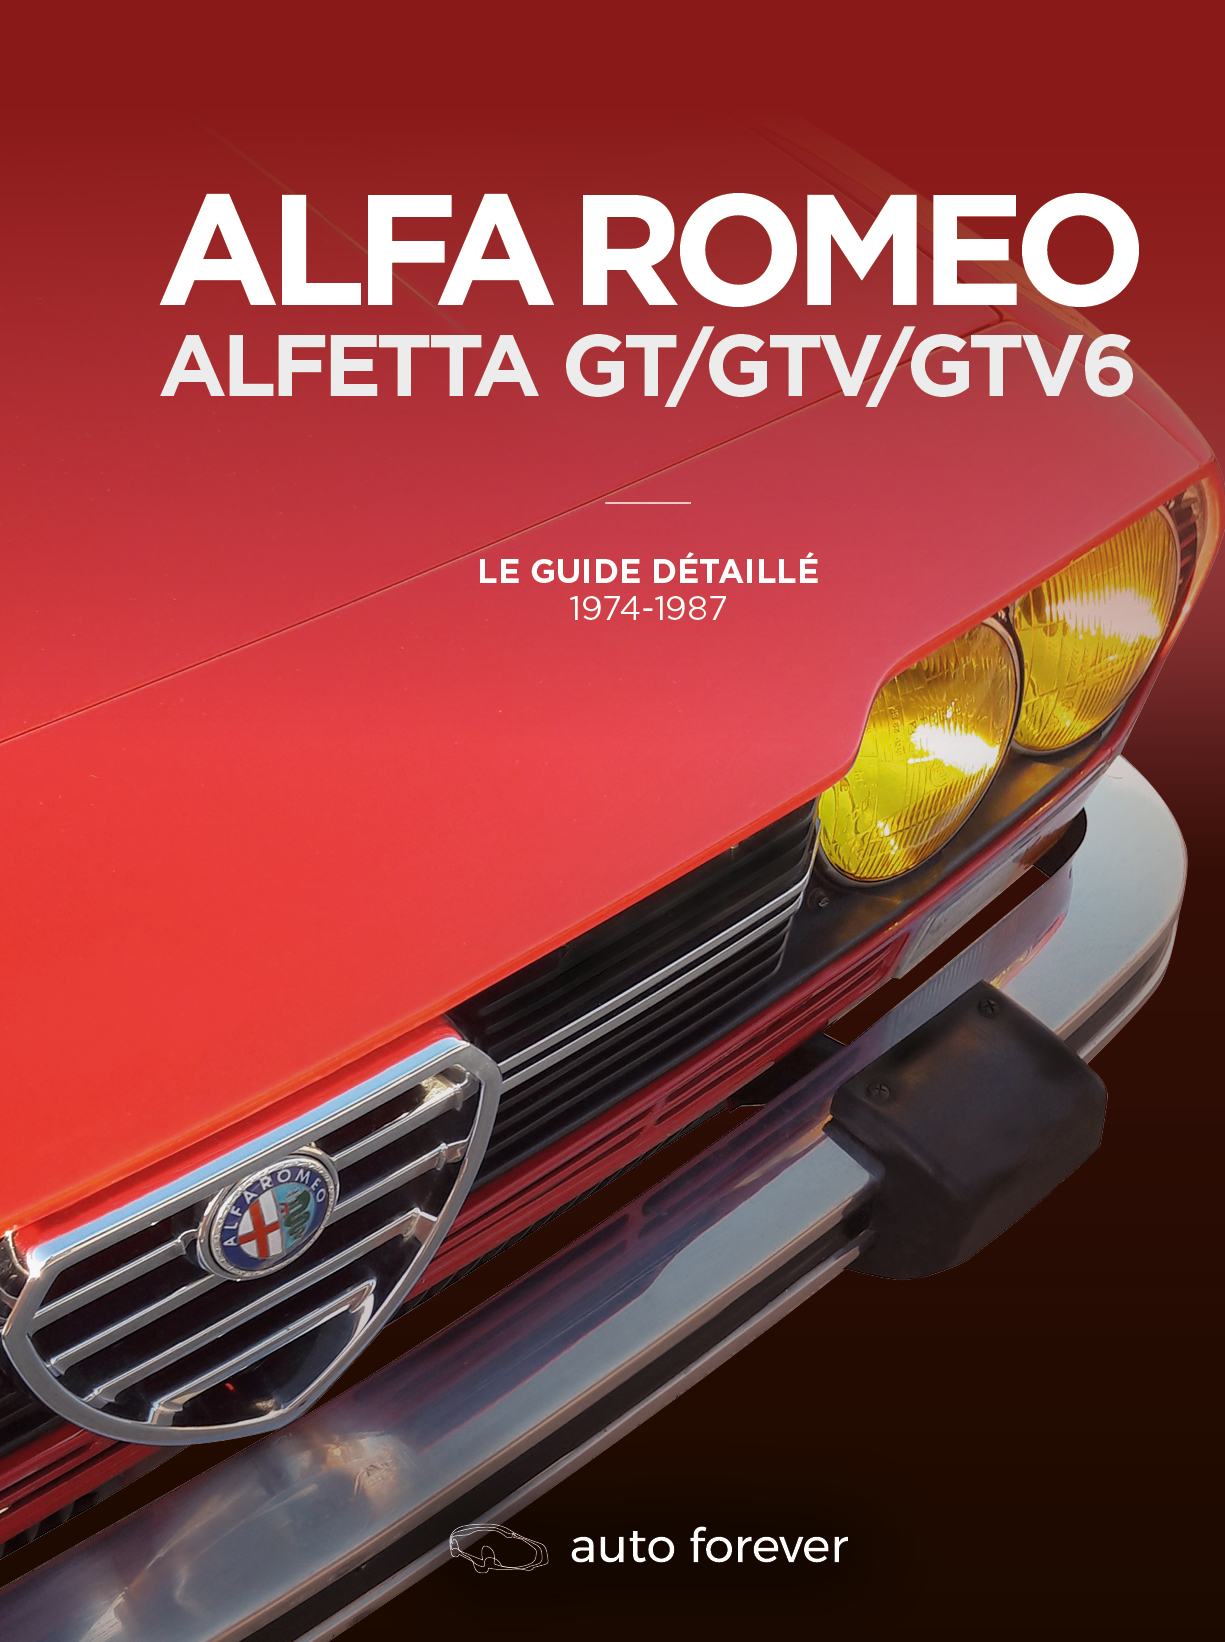 ALFA ROMEO ALFETTA GT/GTV/GTV6 - LE GUIDE DETAILLE 1974-1987